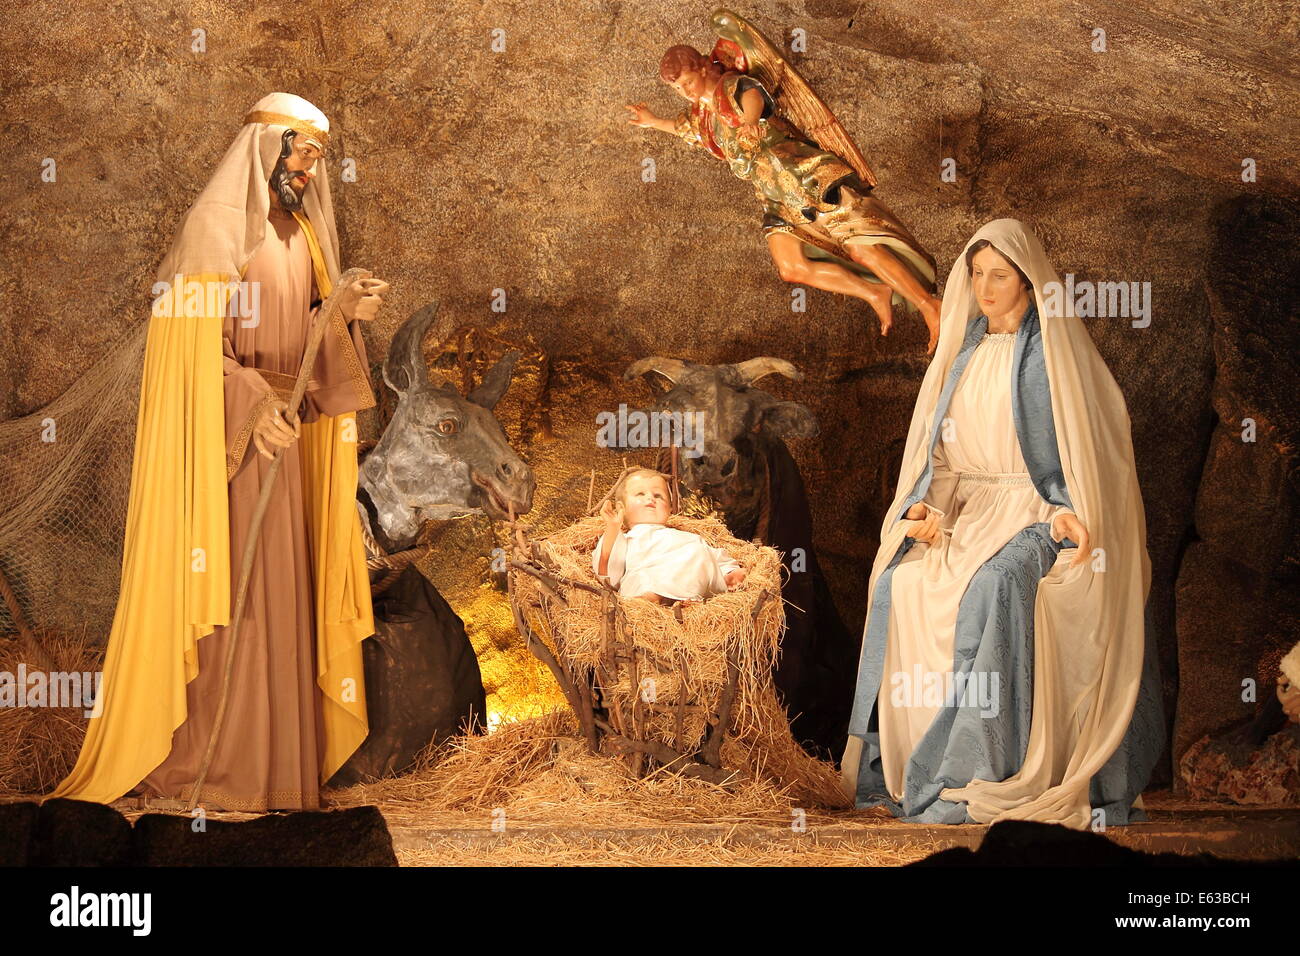 VATICAN - DECEMBER 25: The nativity scene of the christmas crib on ...